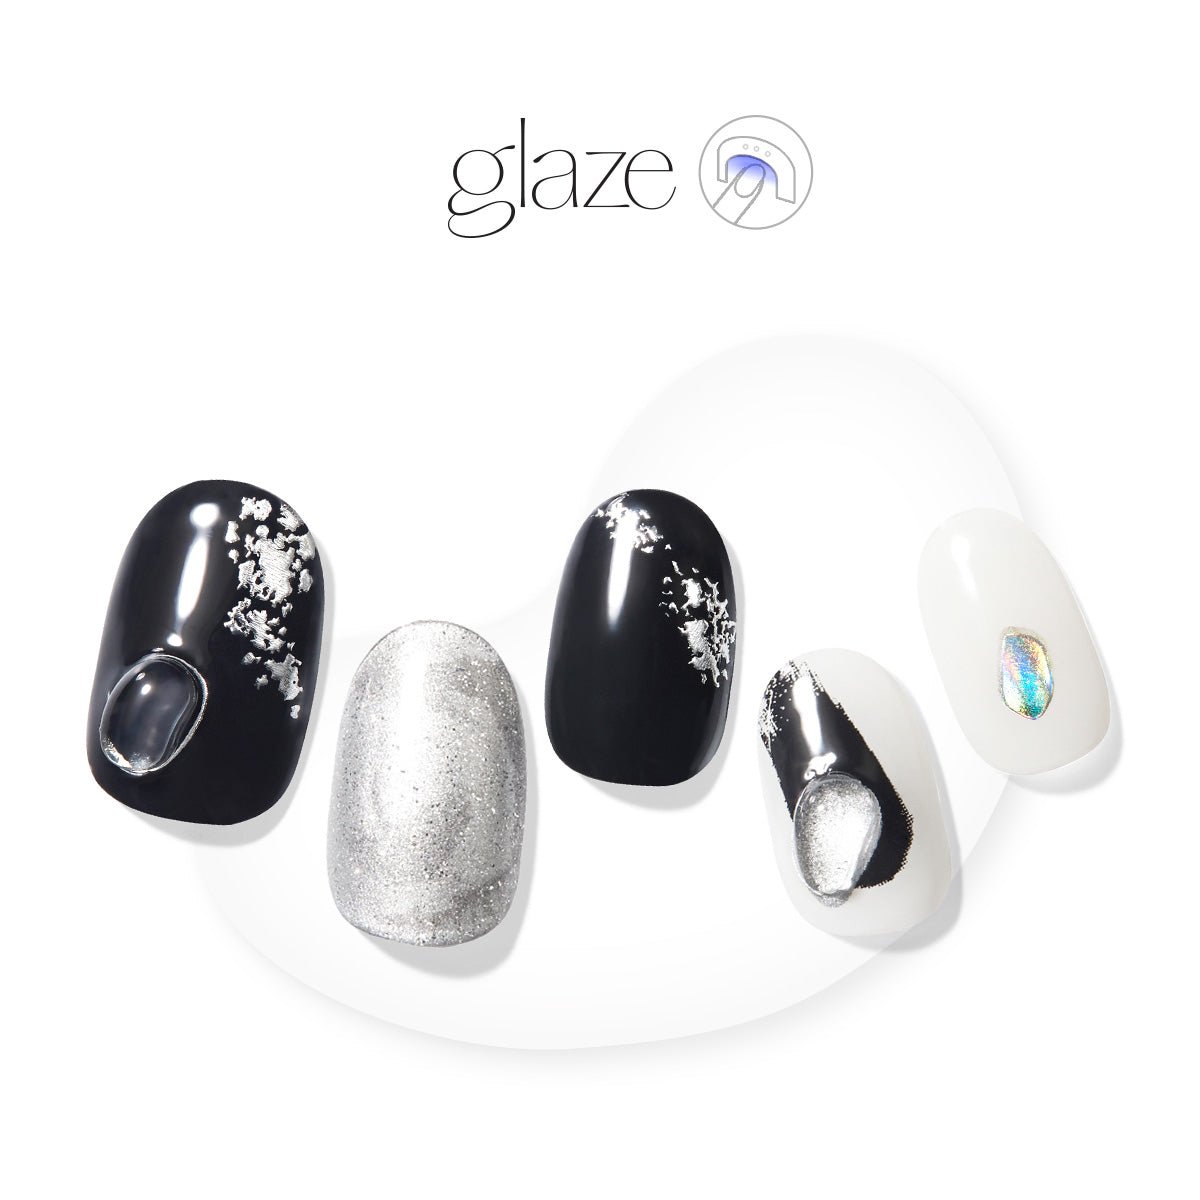 Signature - Glaze Art - Manicure - Dashing Diva Singapore